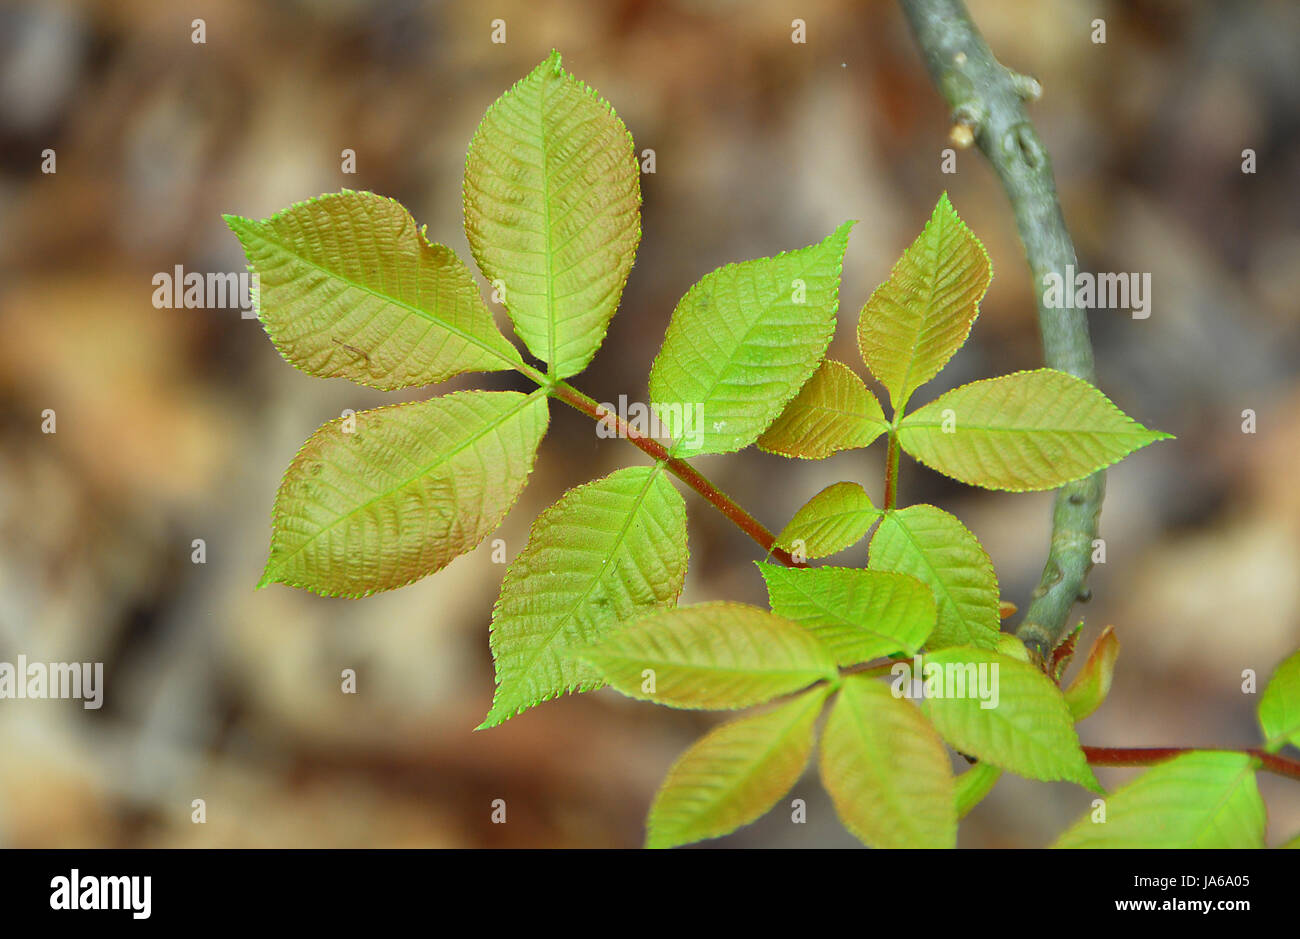 leaf, colour, skin, poison, gardening, tender, color, rash, lawn, green, ivy, Stock Photo